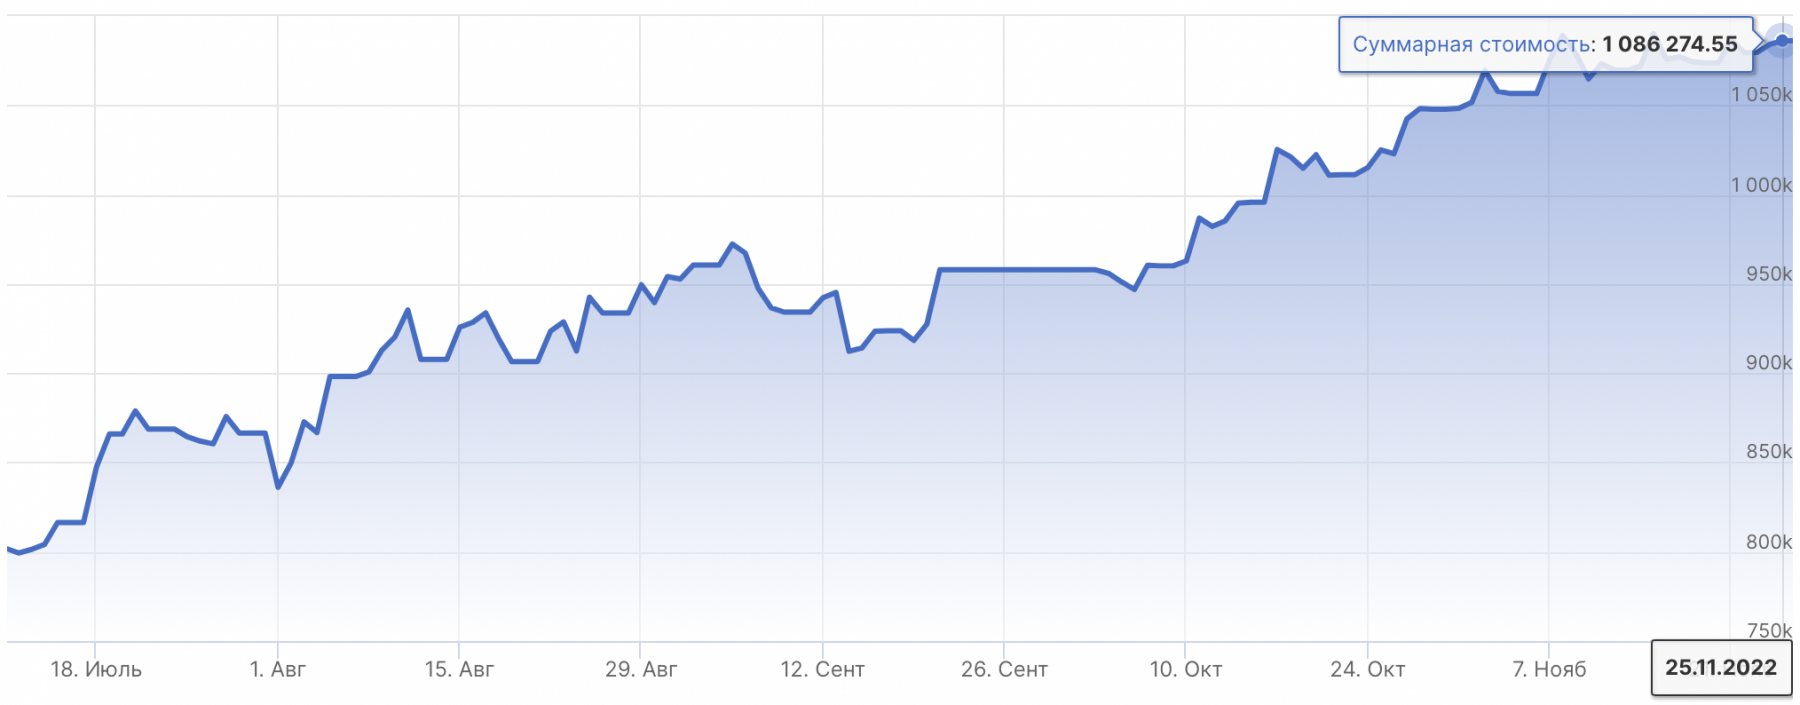 Итоги недели на рынке акций РФ: +11 802 руб.